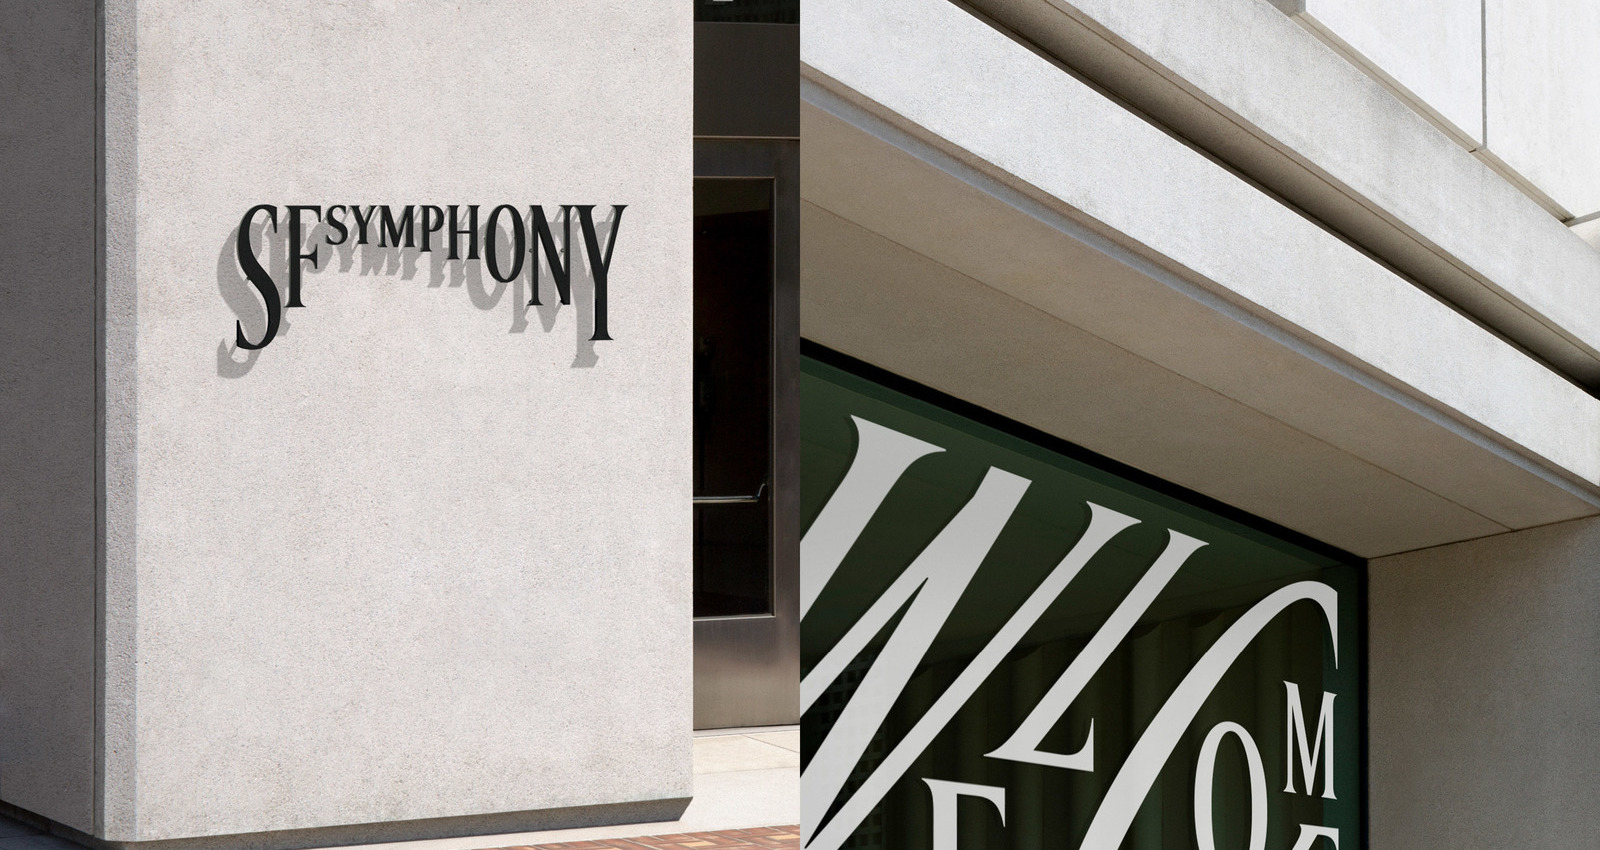 San Francisco Symphony Dynamic Logotype